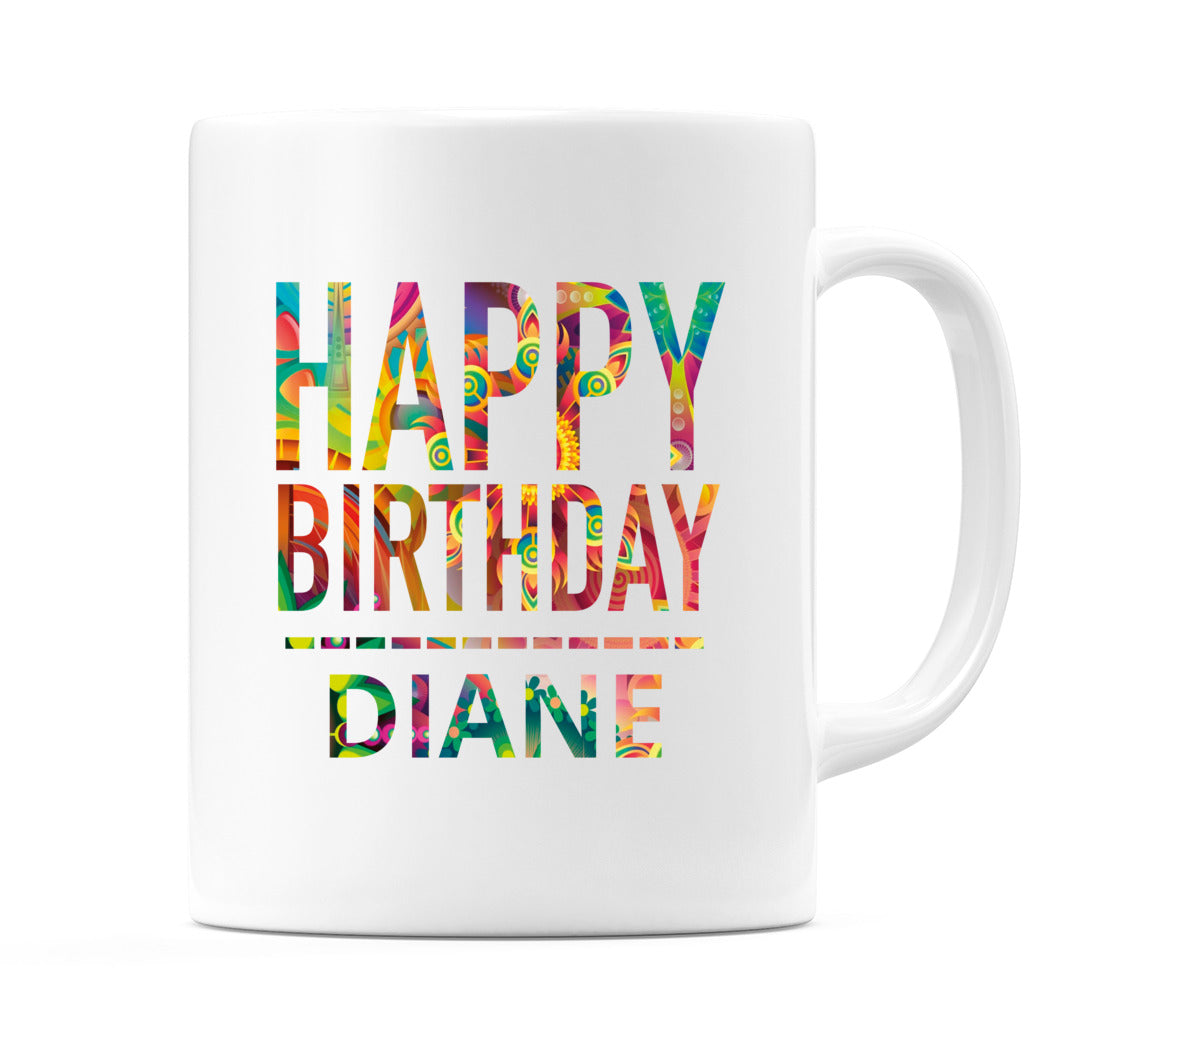 Happy Birthday Diane (Tie Dye Effect) Mug Cup by WeDoMugs